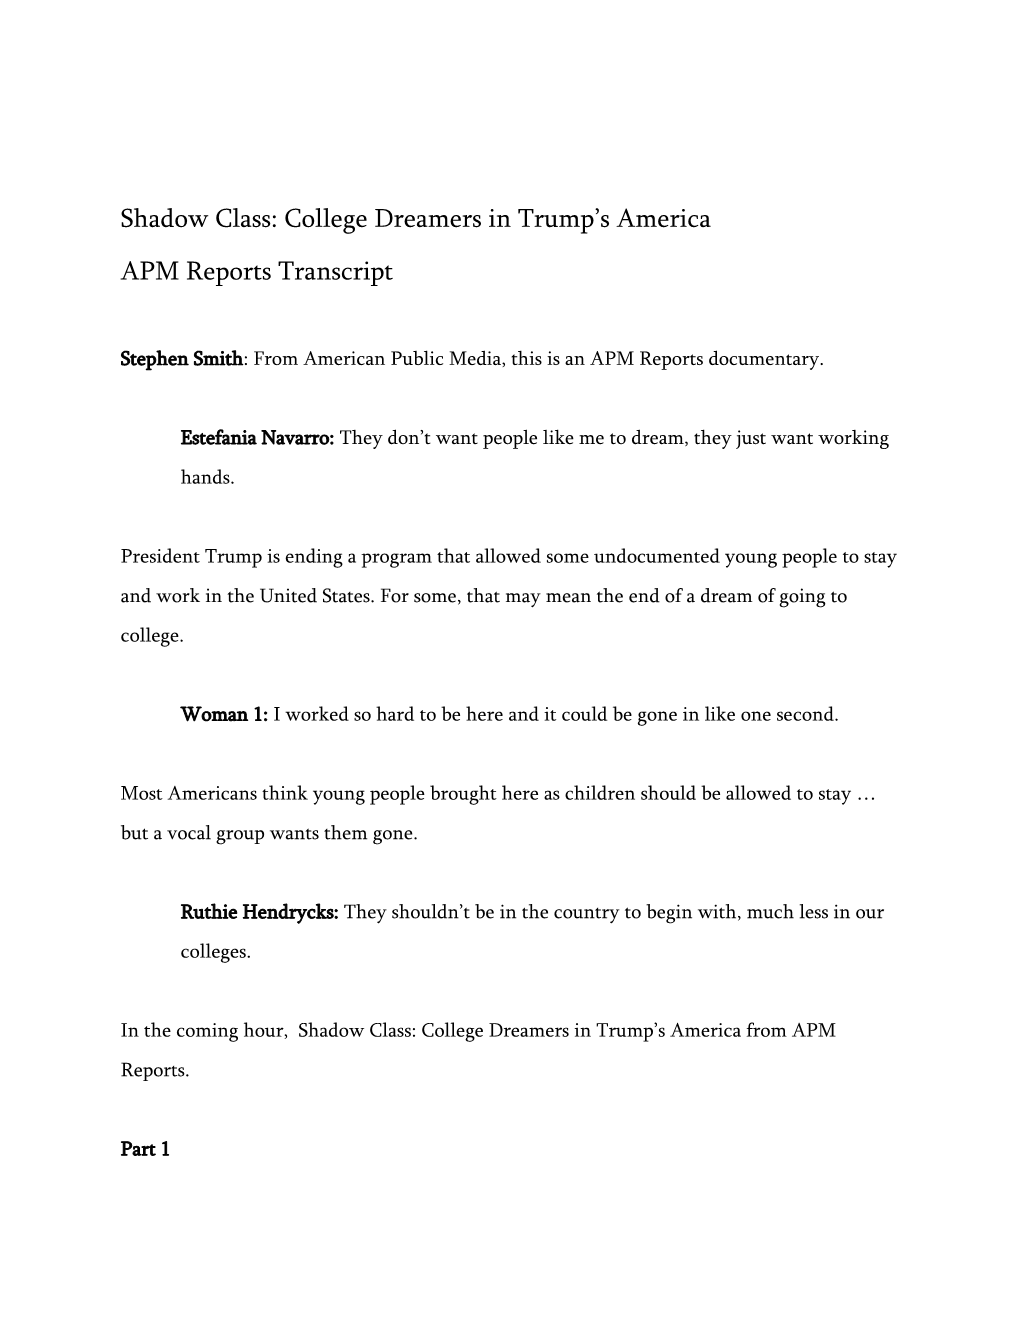 Shadow Class: College Dreamers in Trump's America APM Reports Transcript